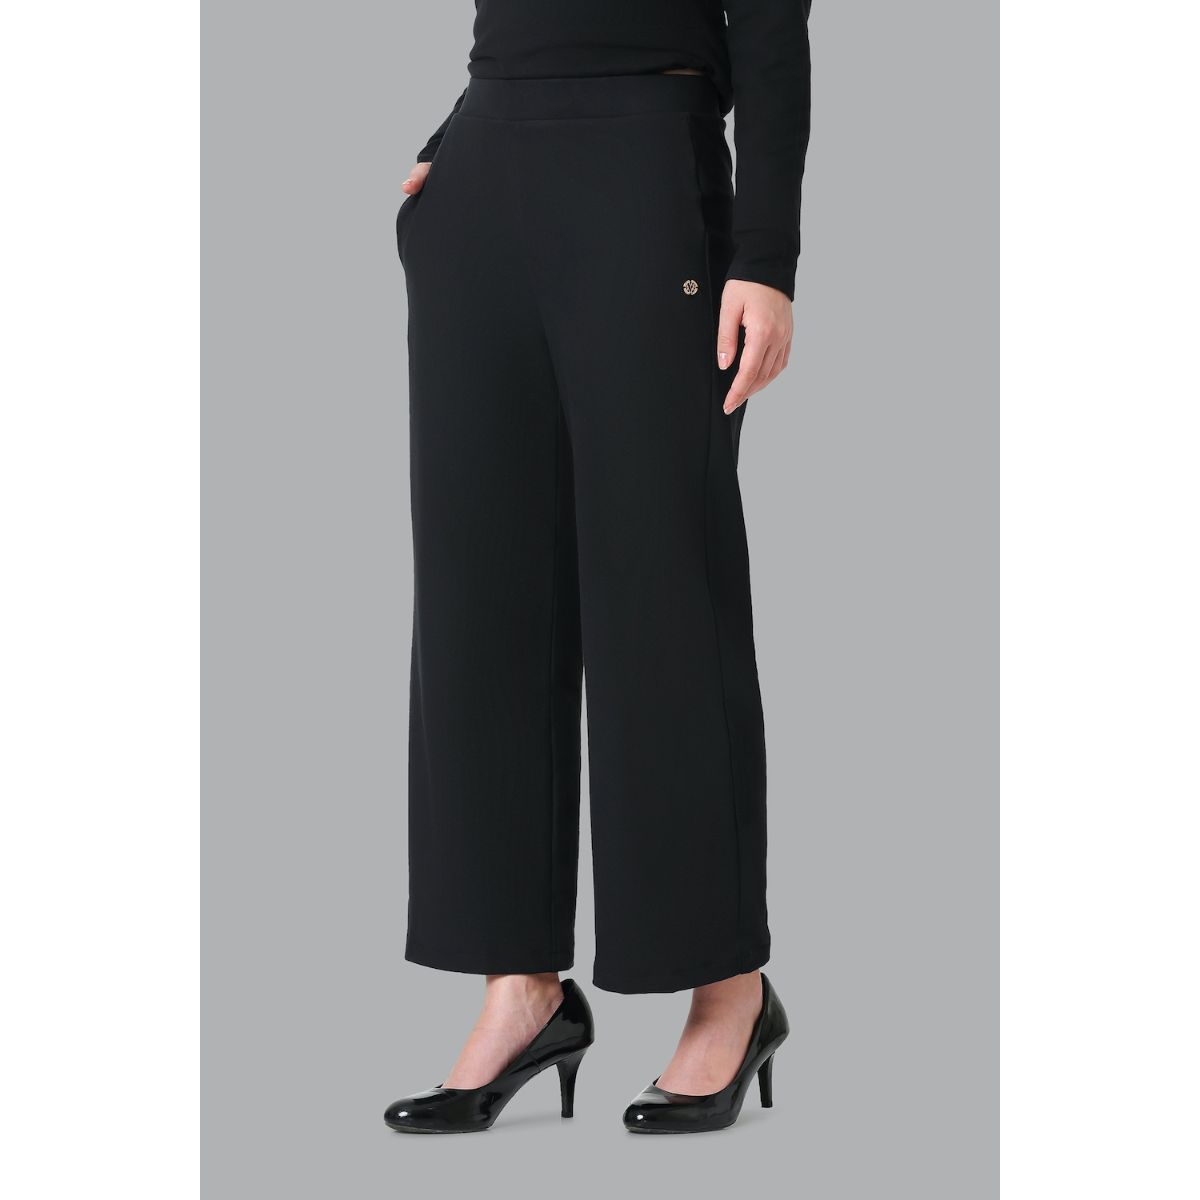 Buy BLACKBUCK Women Black Wide Leg Stretchable HIGH Rise Formal Parallel  Pants (2XL, BLACK3) at Amazon.in